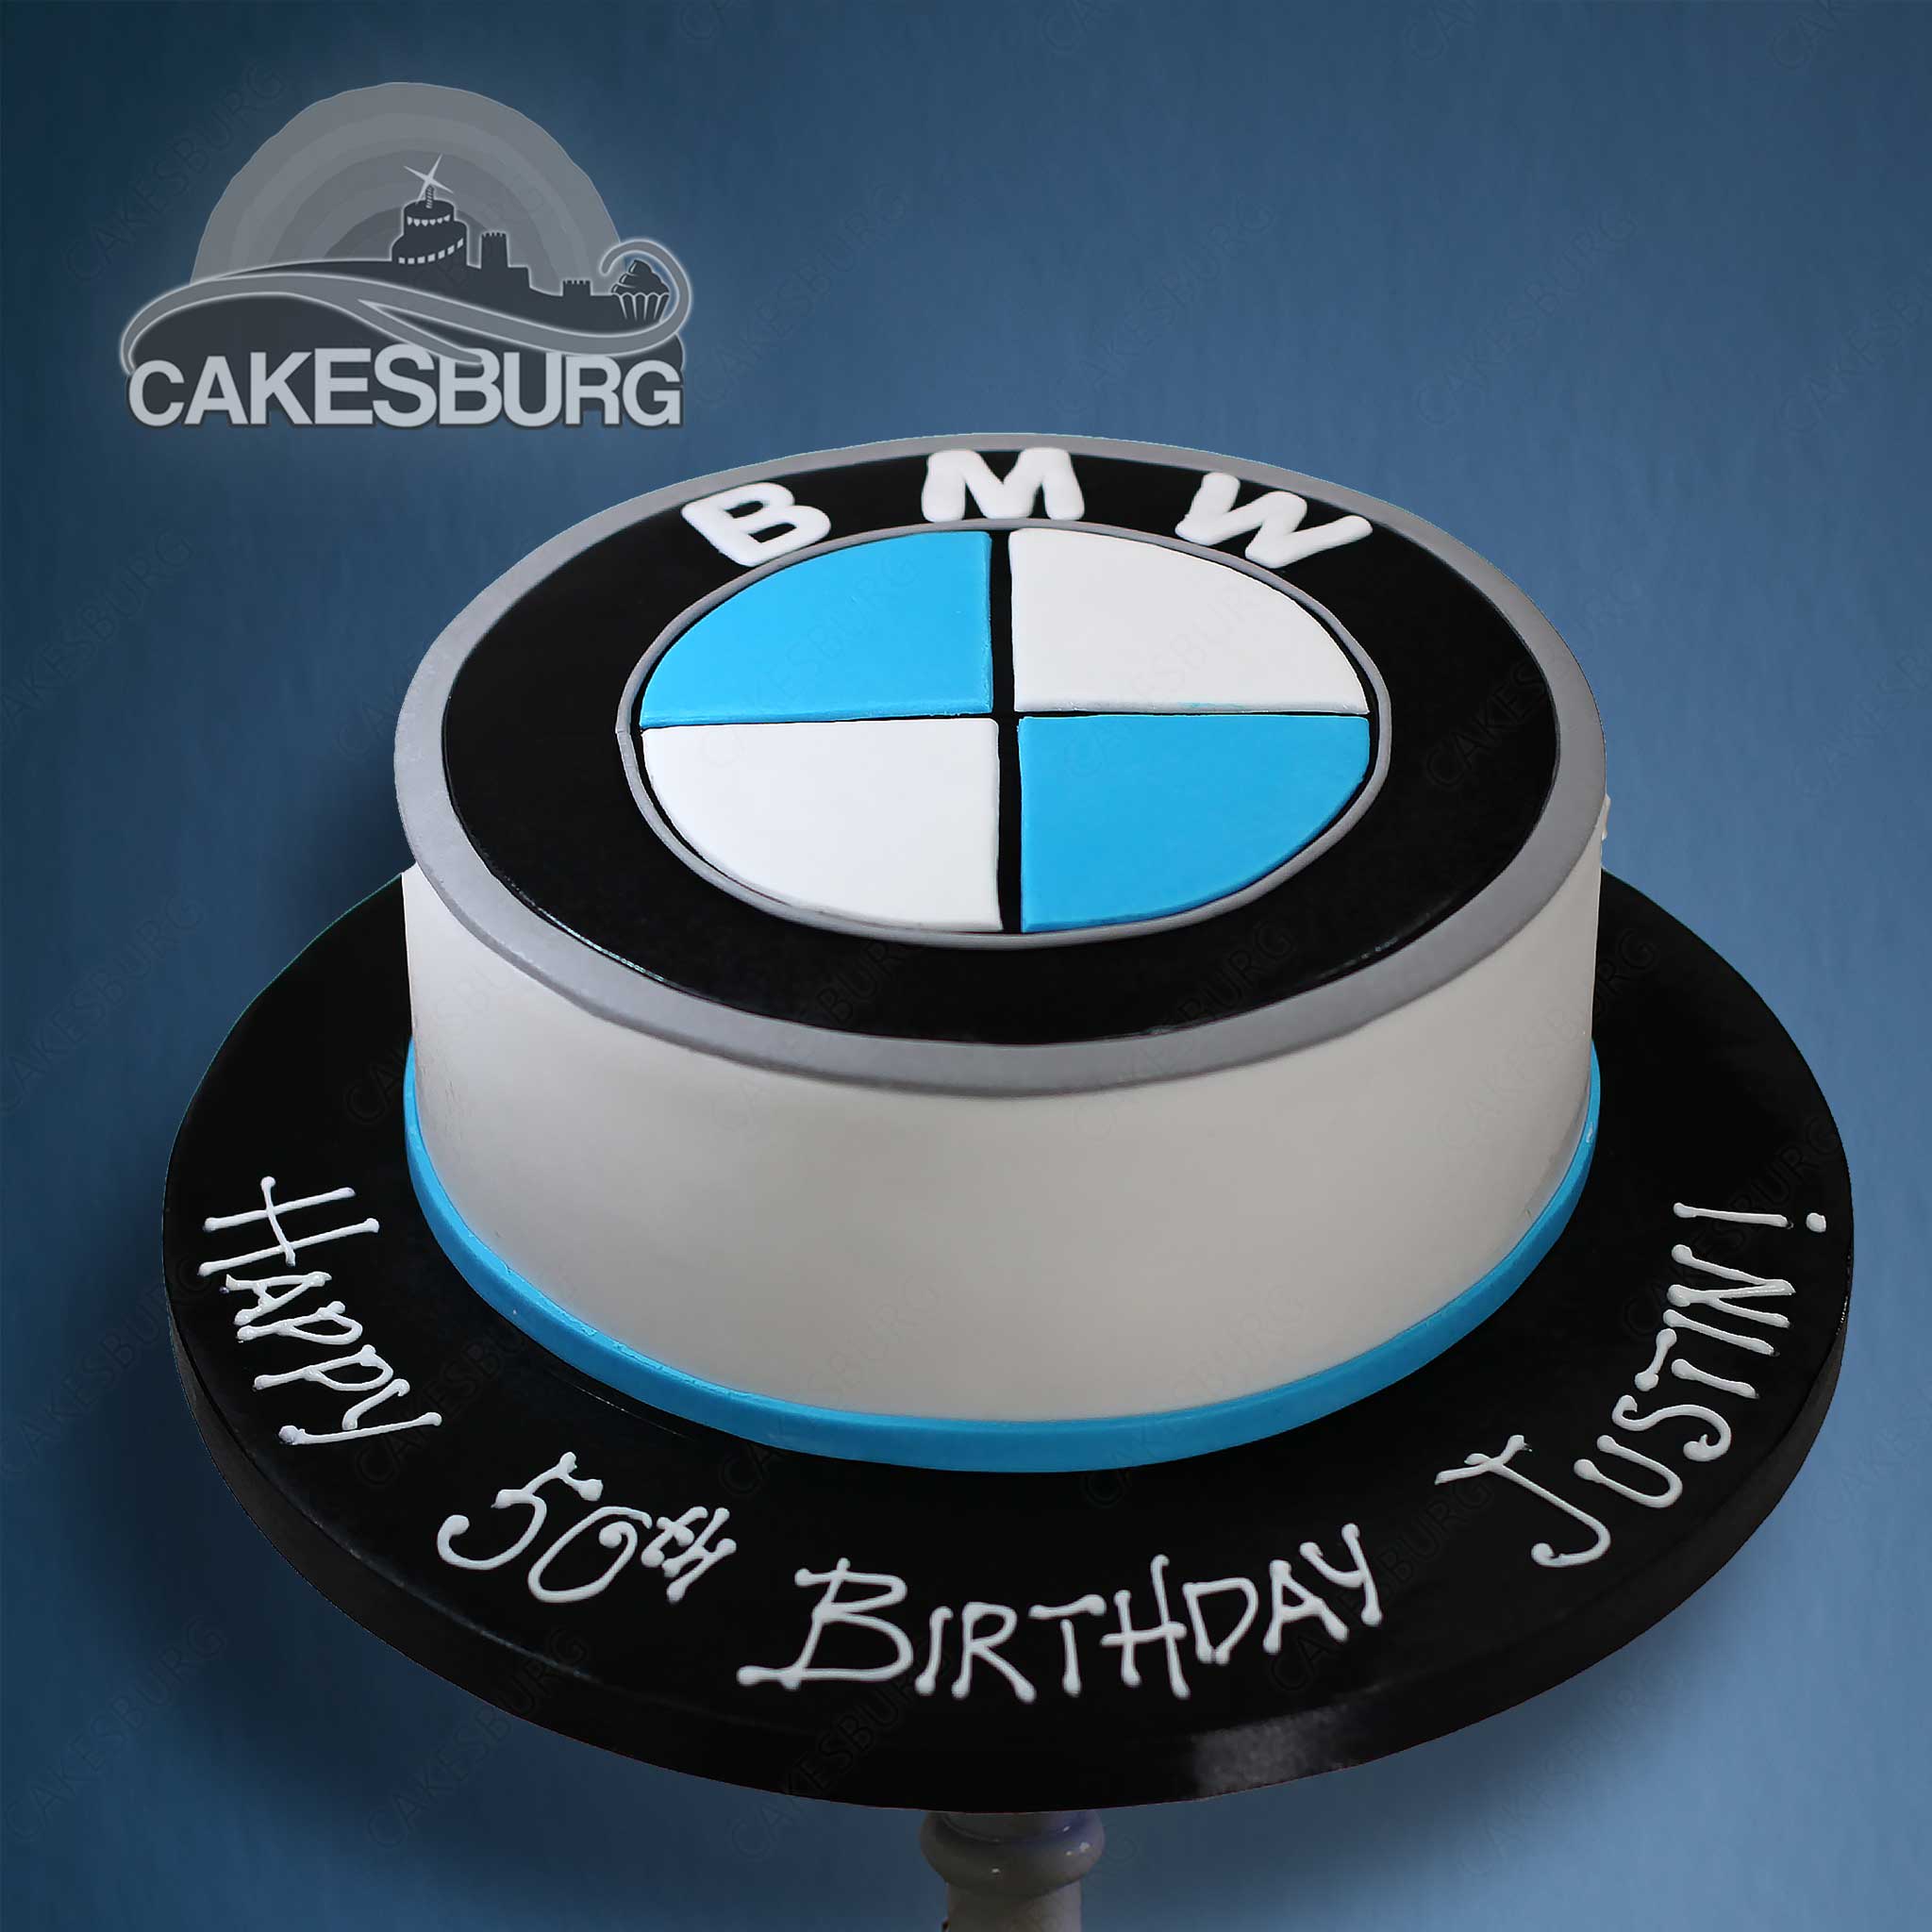 I Love BMW - Decorated Cake by KamiSpasova - CakesDecor